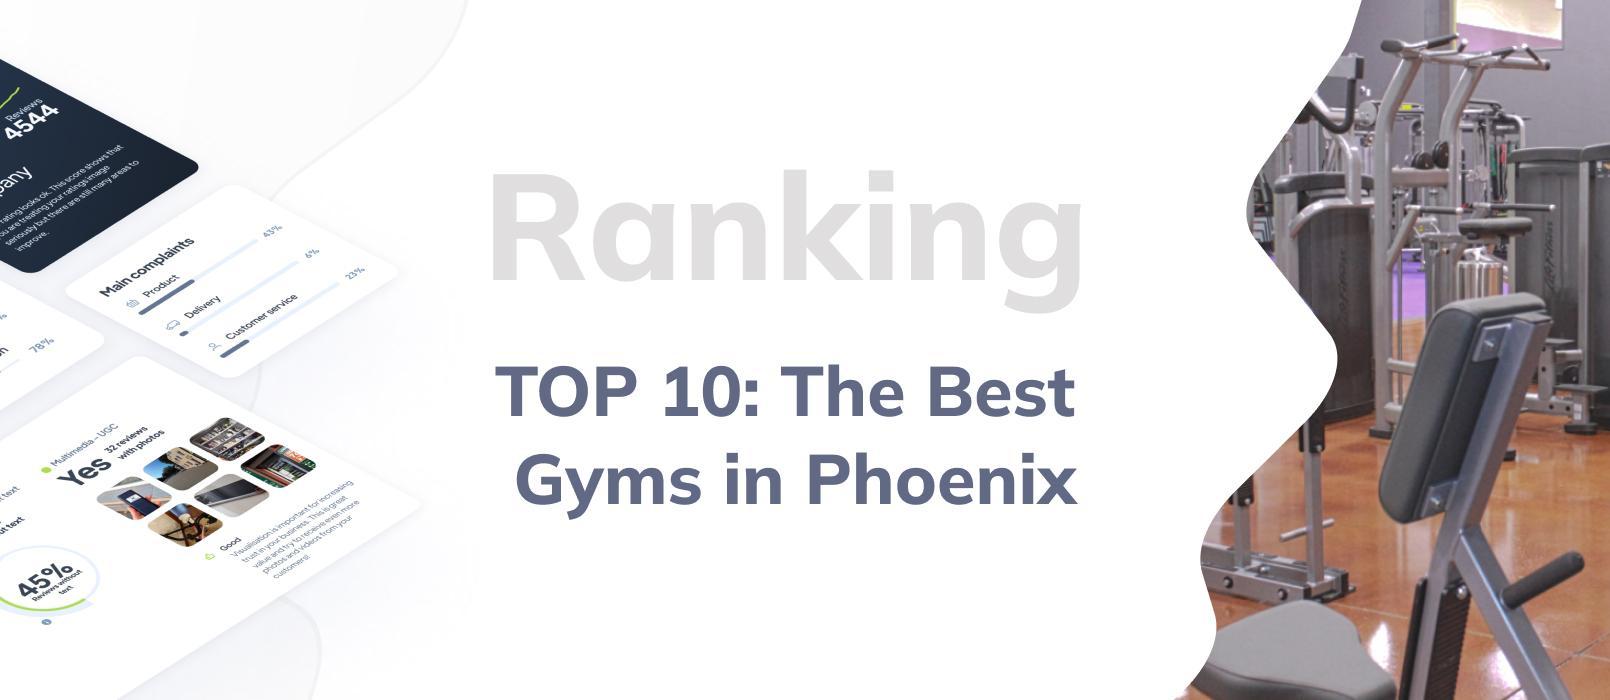 Gyms in Phoenix - TOP 10 ranking